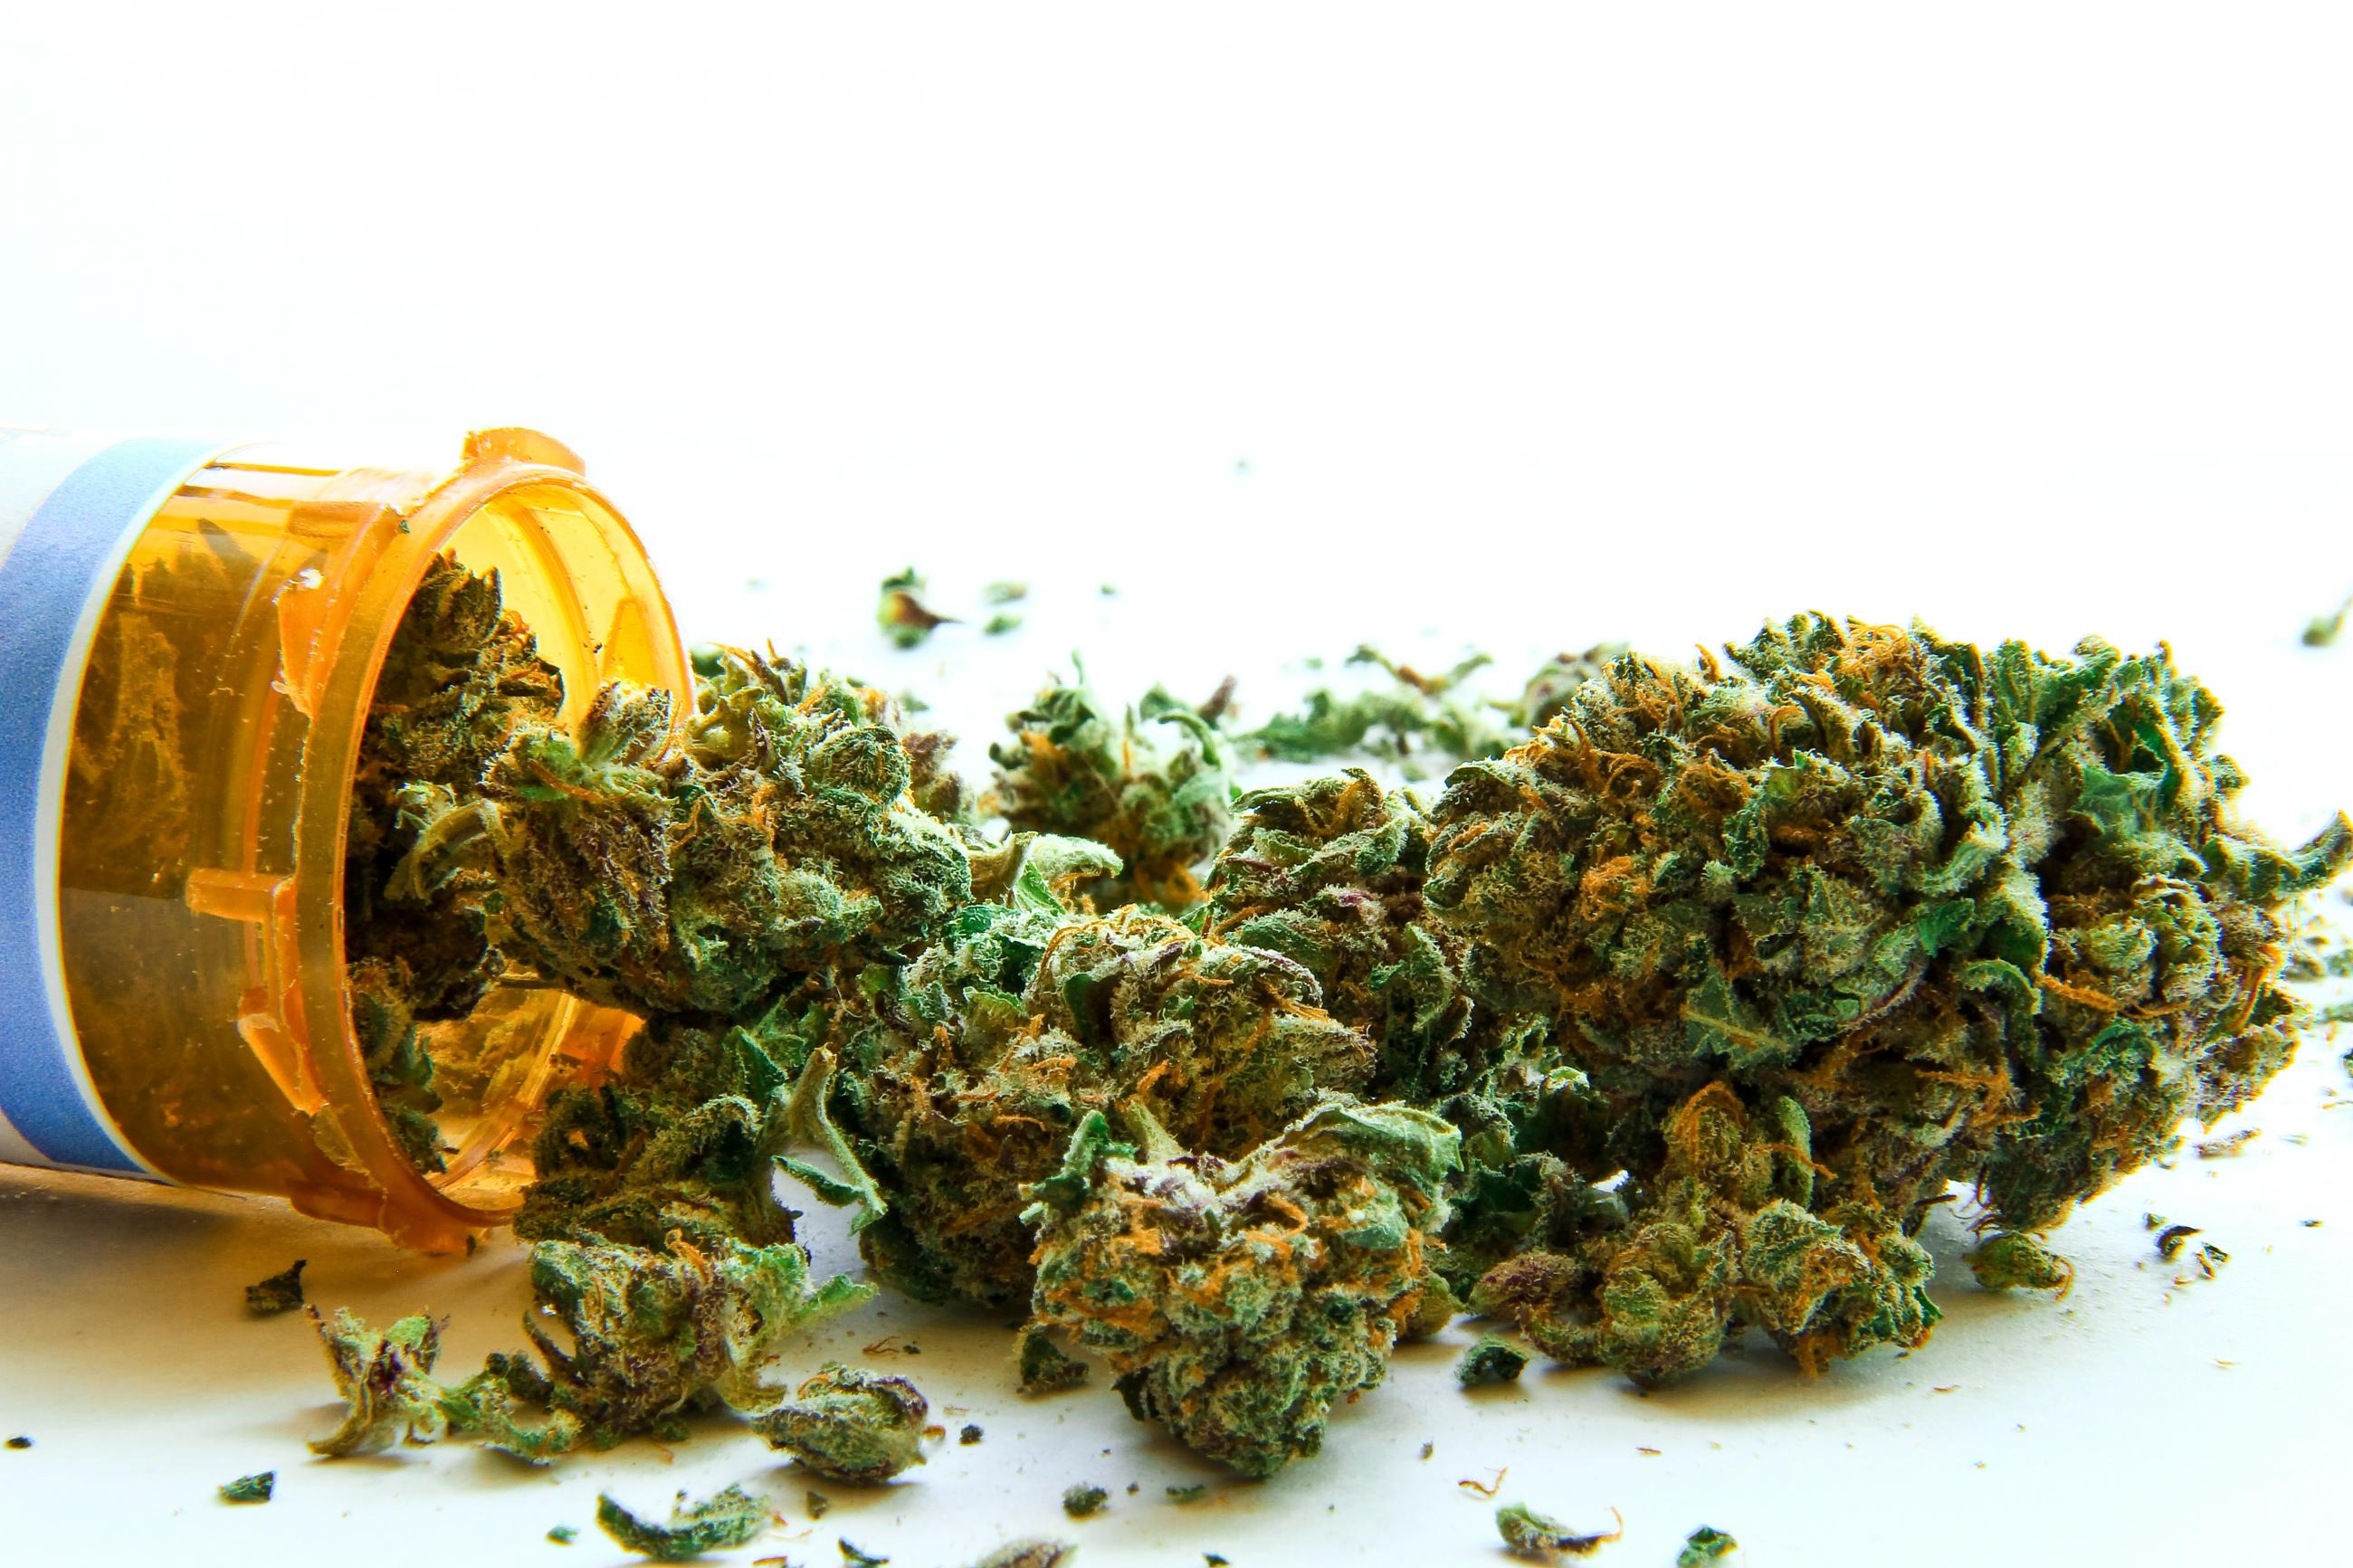 What Sets Medical and Recreational Marijuana Apart?